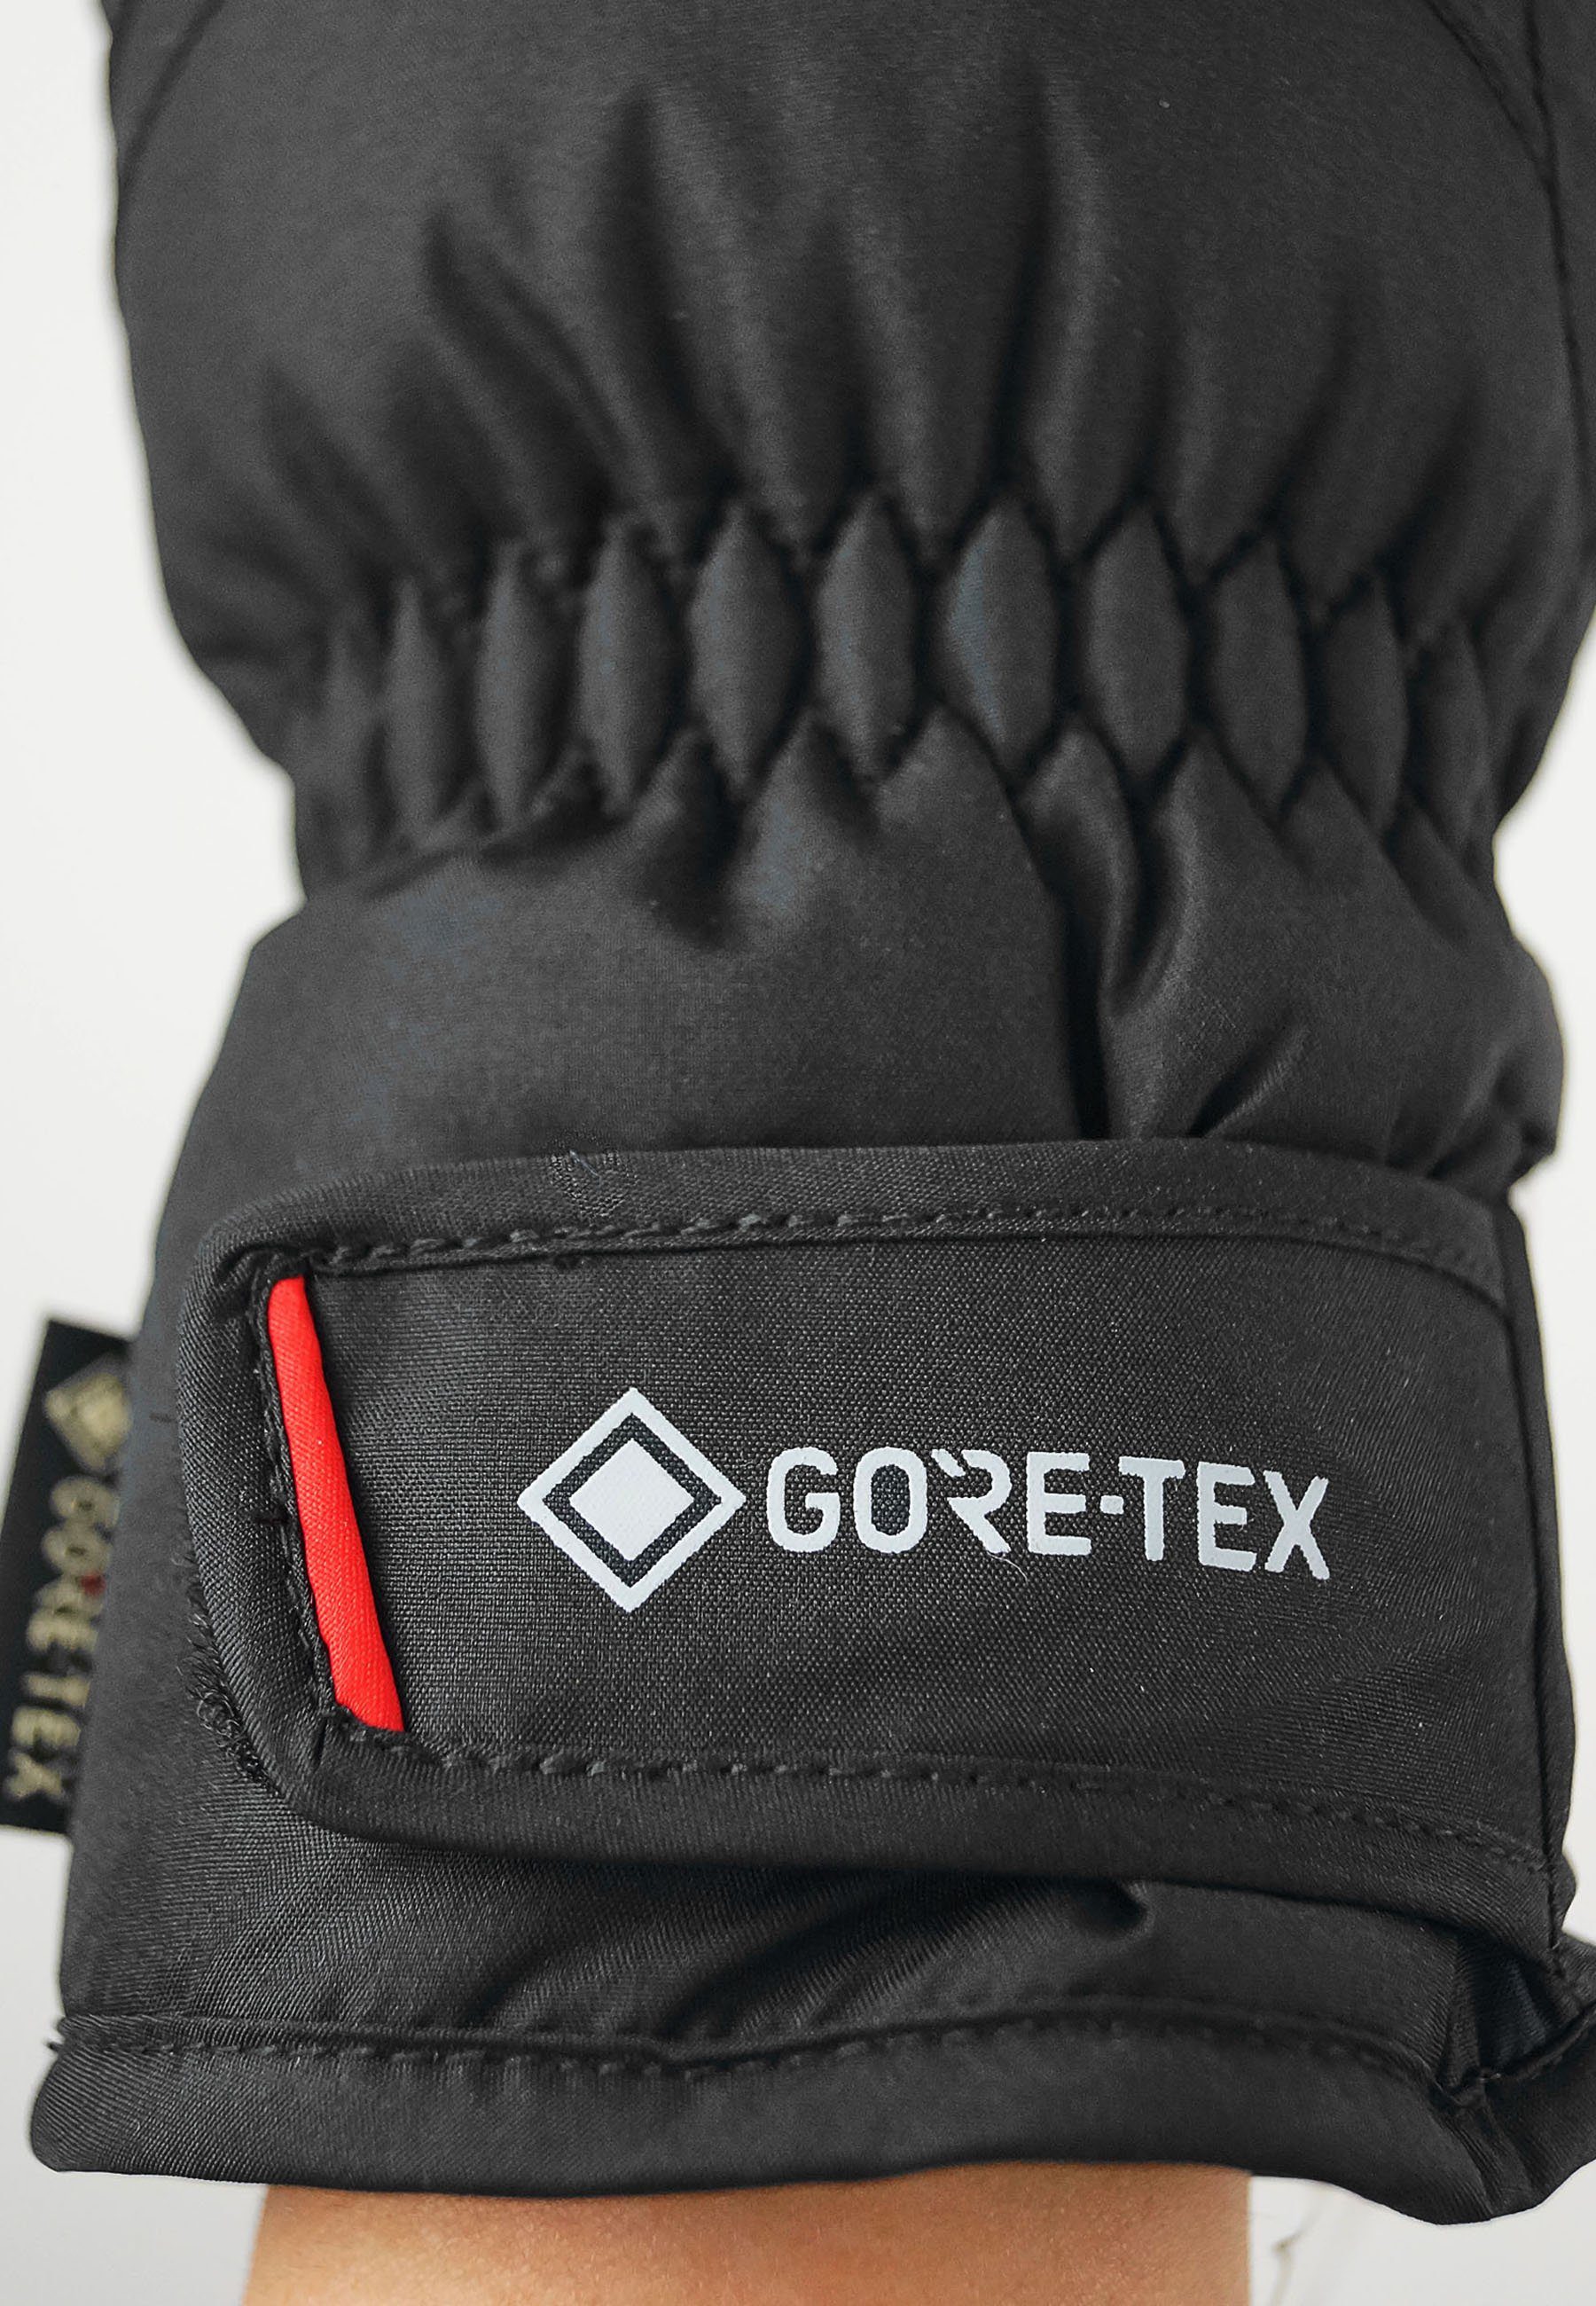 GORE-TEX Funktionsmembran Skihandschuhe Reusch wasserdichter rot-schwarz mit Teddy